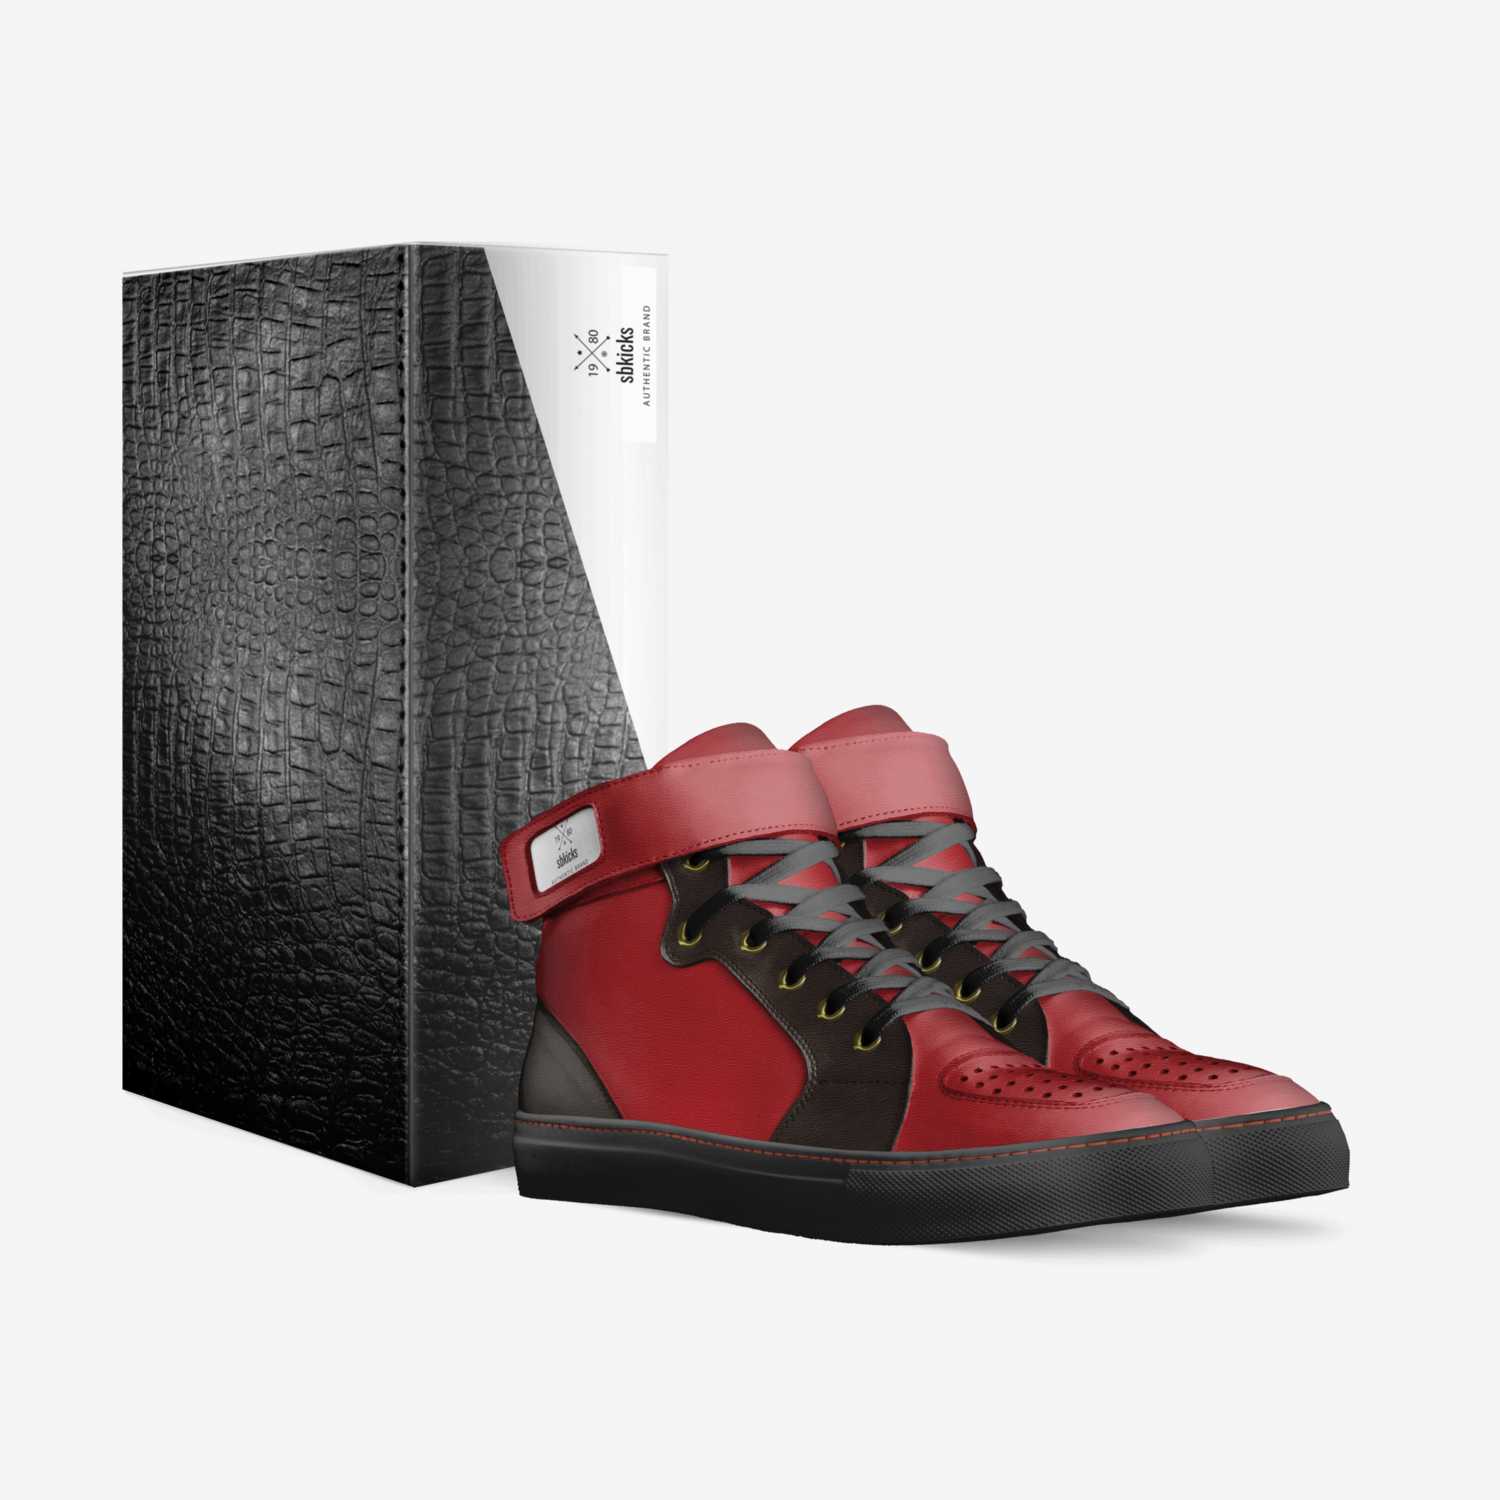 sbkicks custom made in Italy shoes by Shontae Borg | Box view